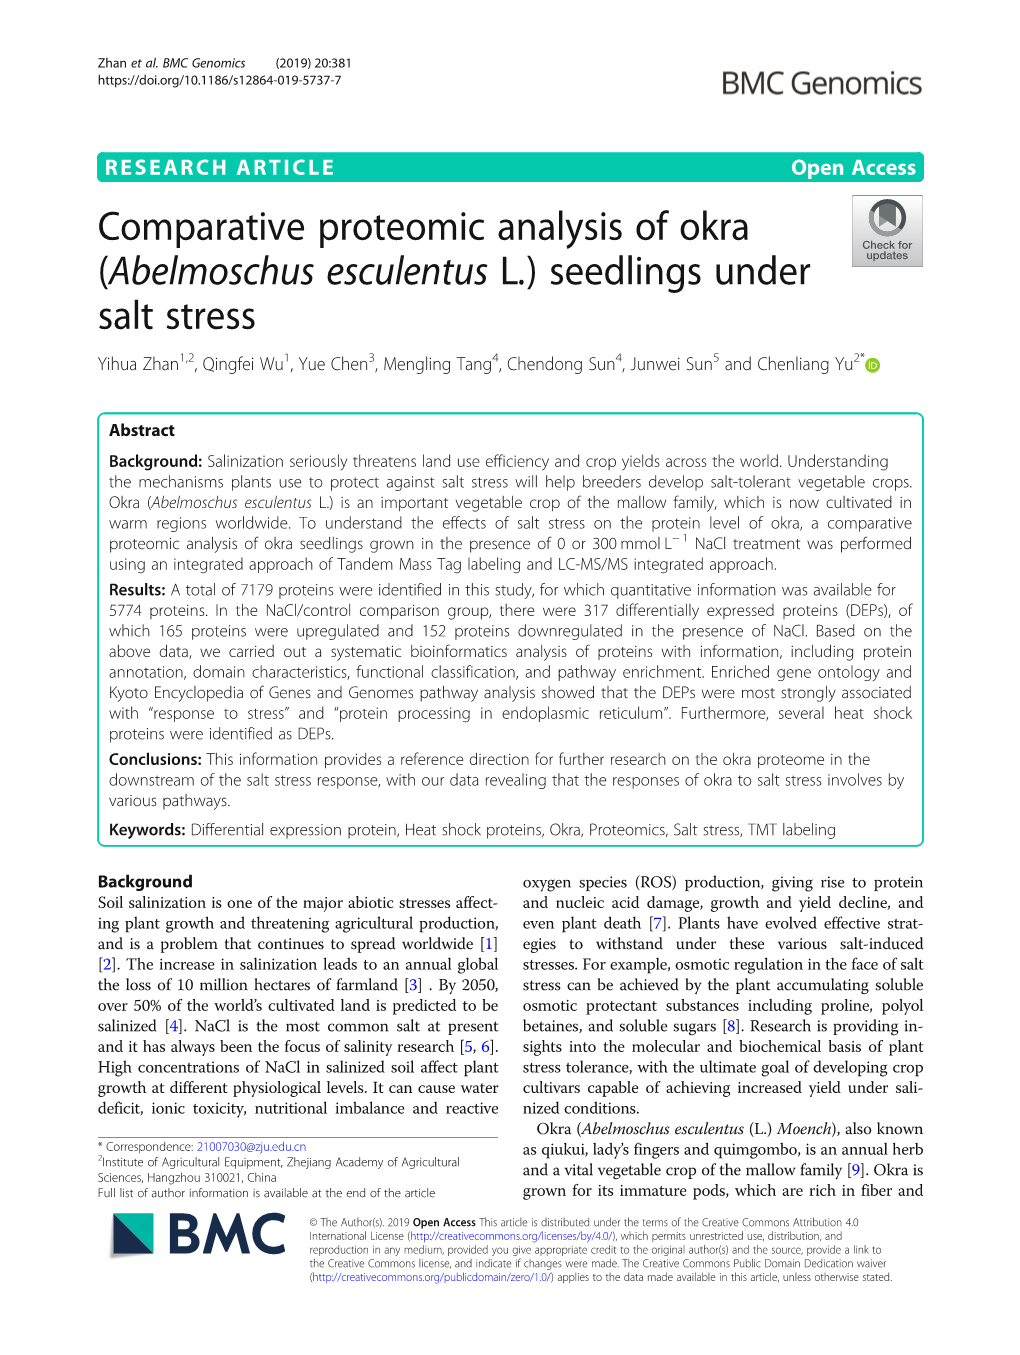 Comparative Proteomic Analysis of Okra (Abelmoschus Esculentus L